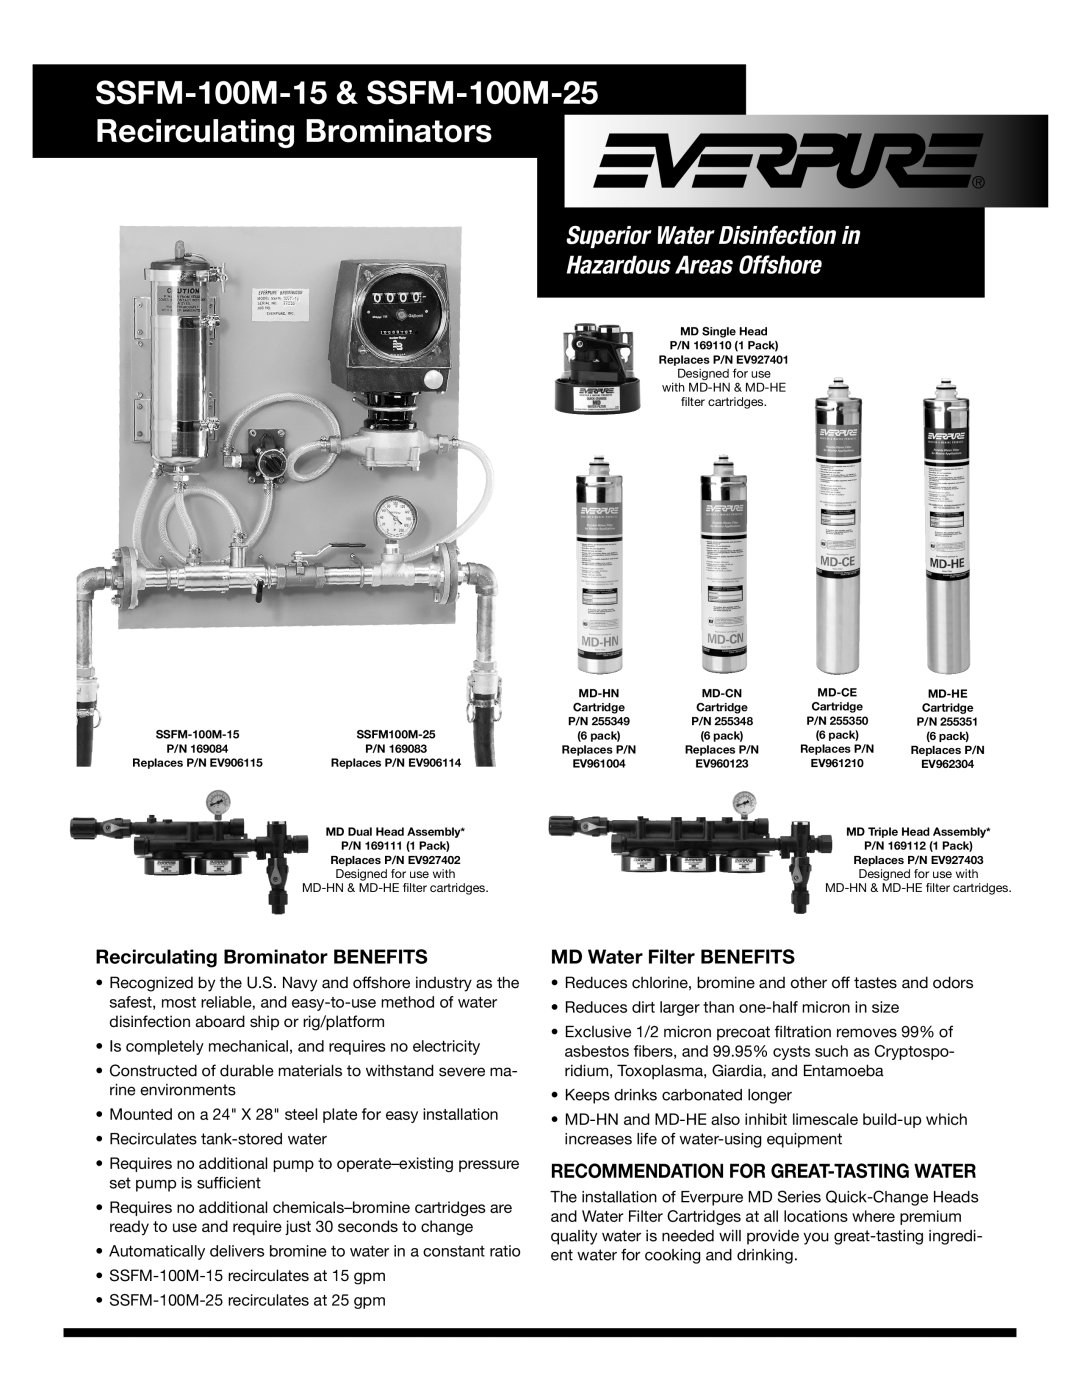 Everpure SSFM-100M-25, SSFM-100M-15 manual Recirculating Brominator BENEFITS, MD Water Filter BENEFITS 